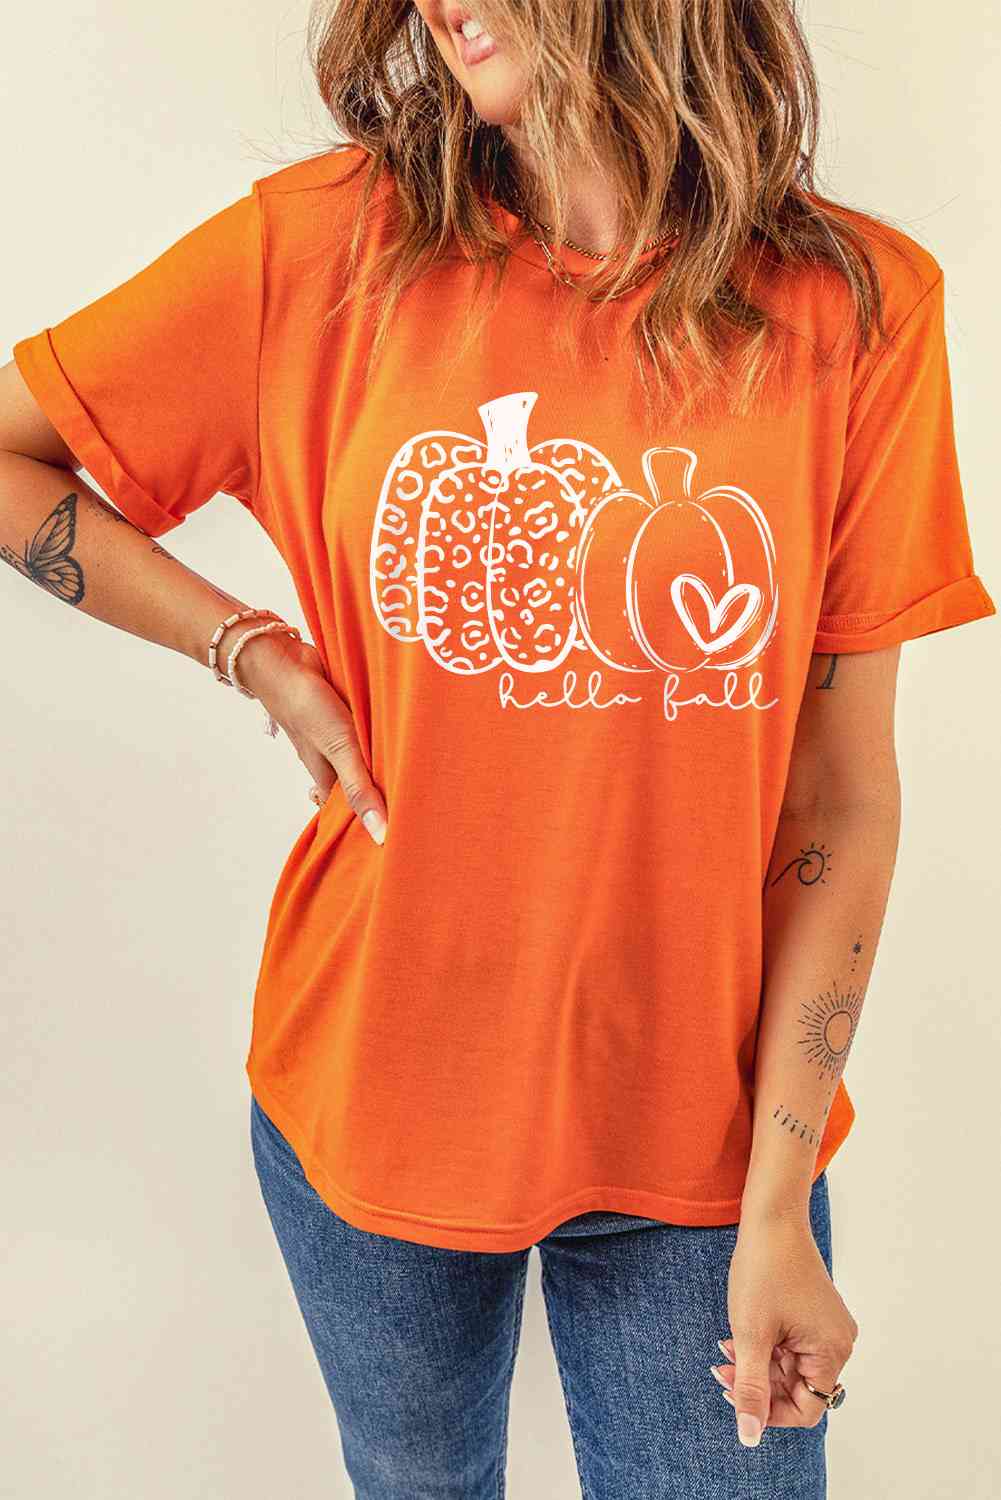 HELLO FALL Pumpkin Graphic T-Shirt king-general-store-5710.myshopify.com